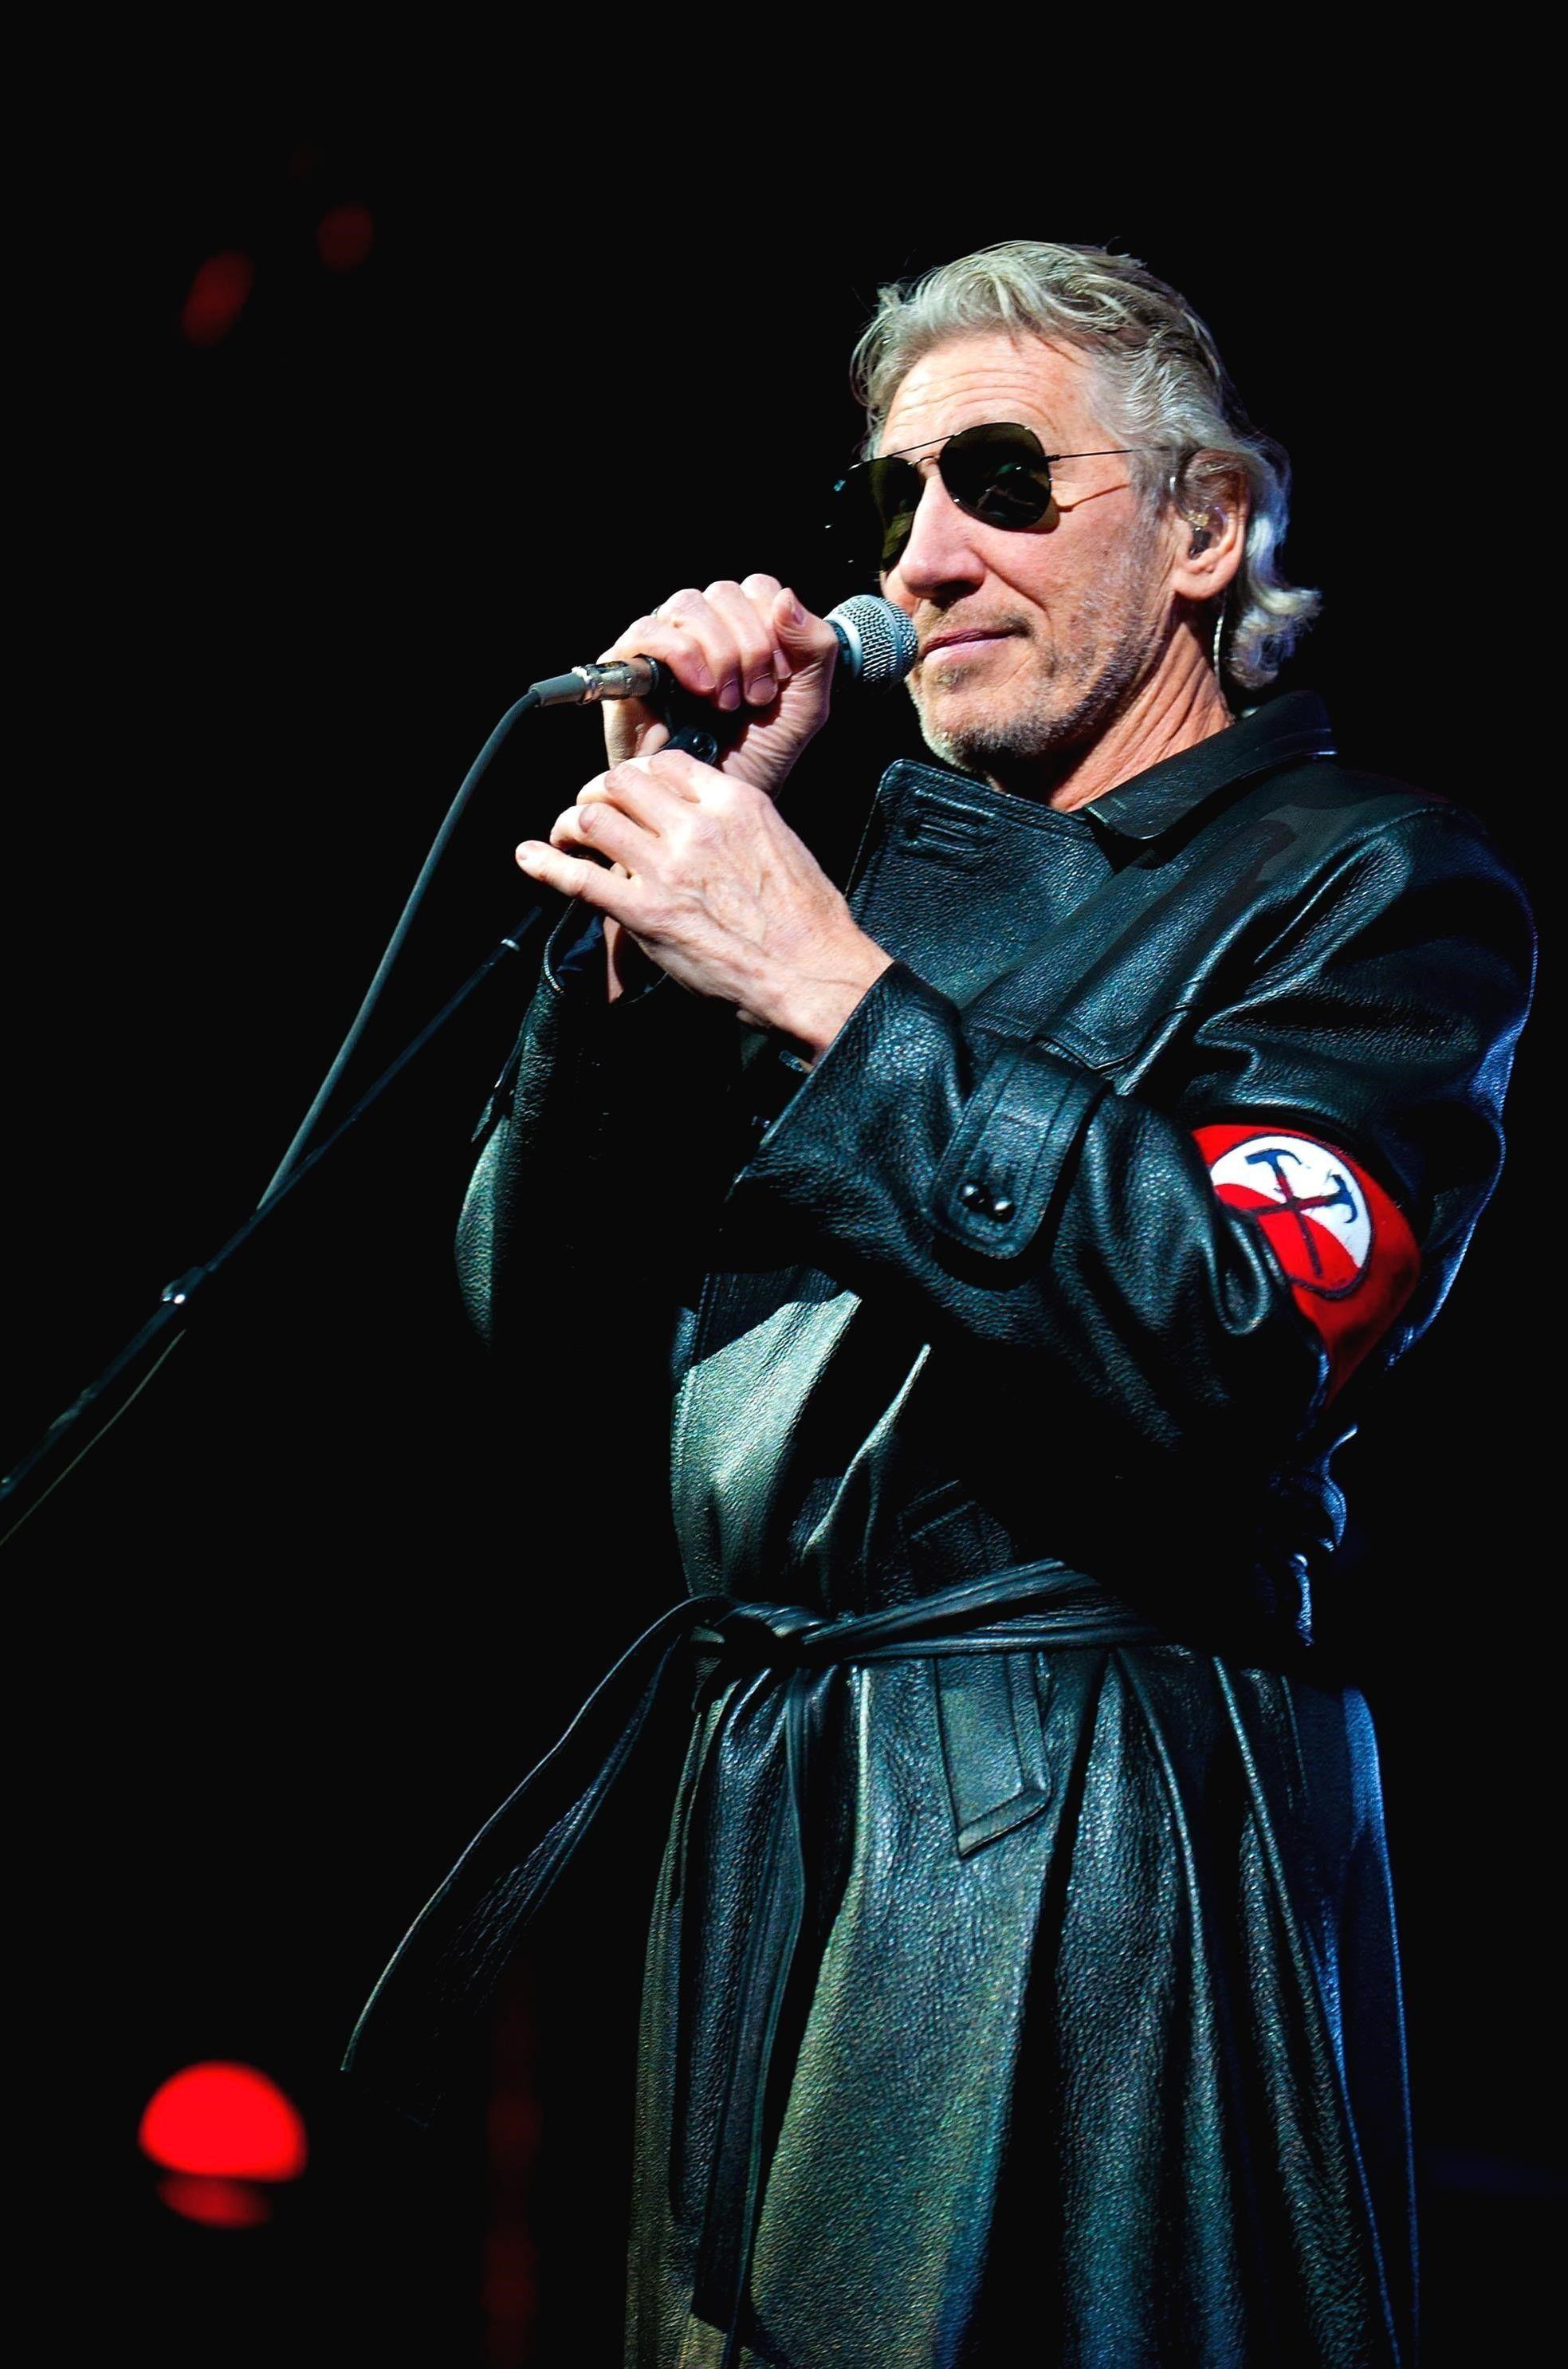 Best HD Photo Wallpaper Pics of Roger Waters. Best Pink Floyd